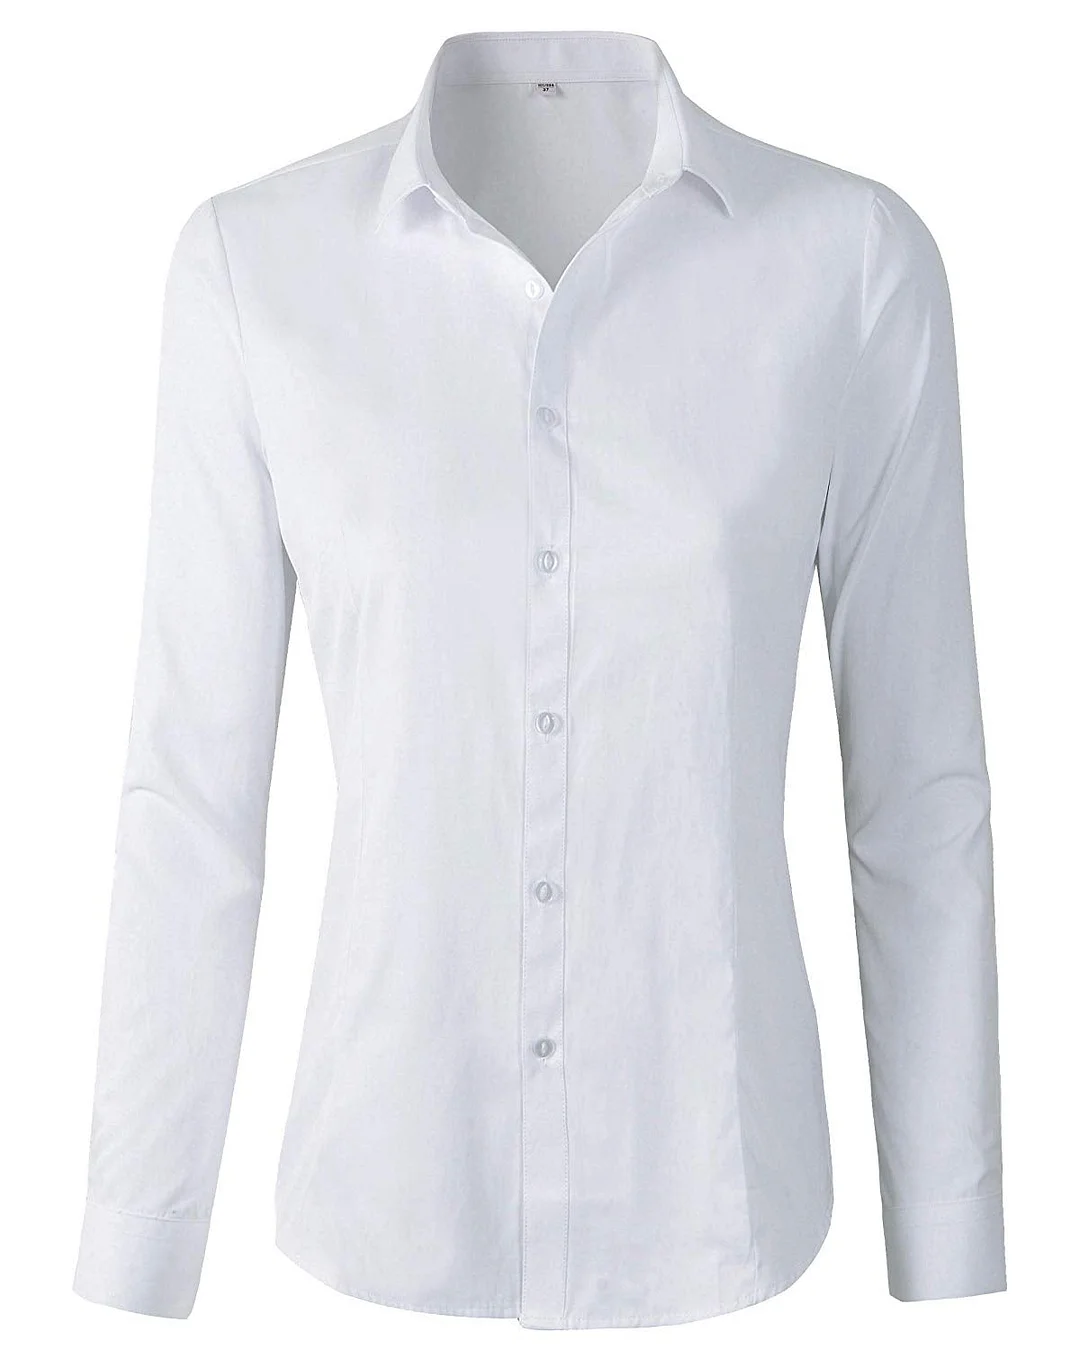 Women's Formal Work Wear White Simple Shirt